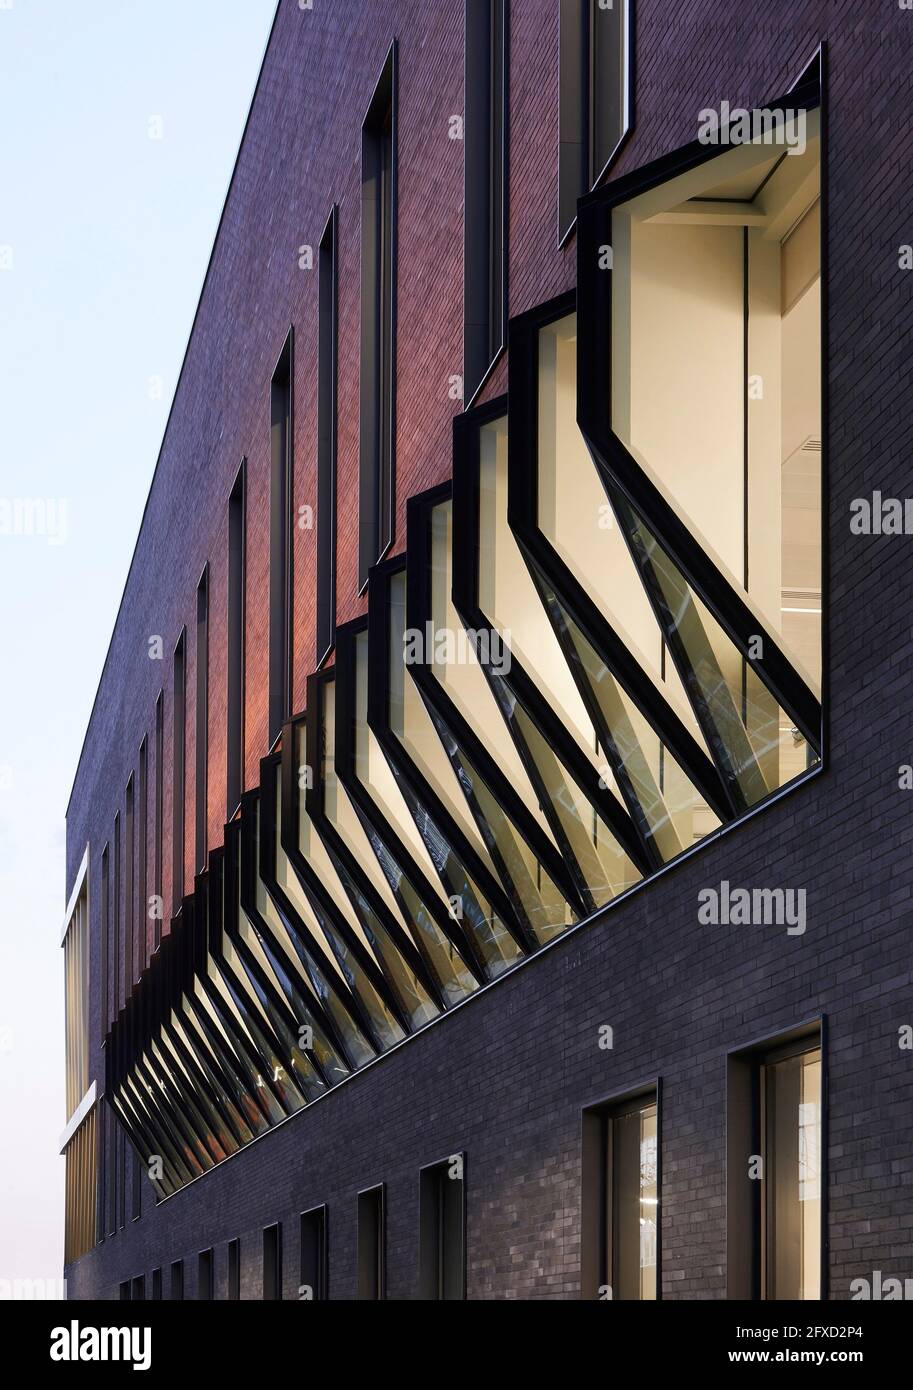 Detalle de fachada al atardecer con interiores iluminados. University of Birmingham, Collaborative Teaching Laboratory, Birmingham, Reino Unido. Arquitecto: Sheppard Foto de stock